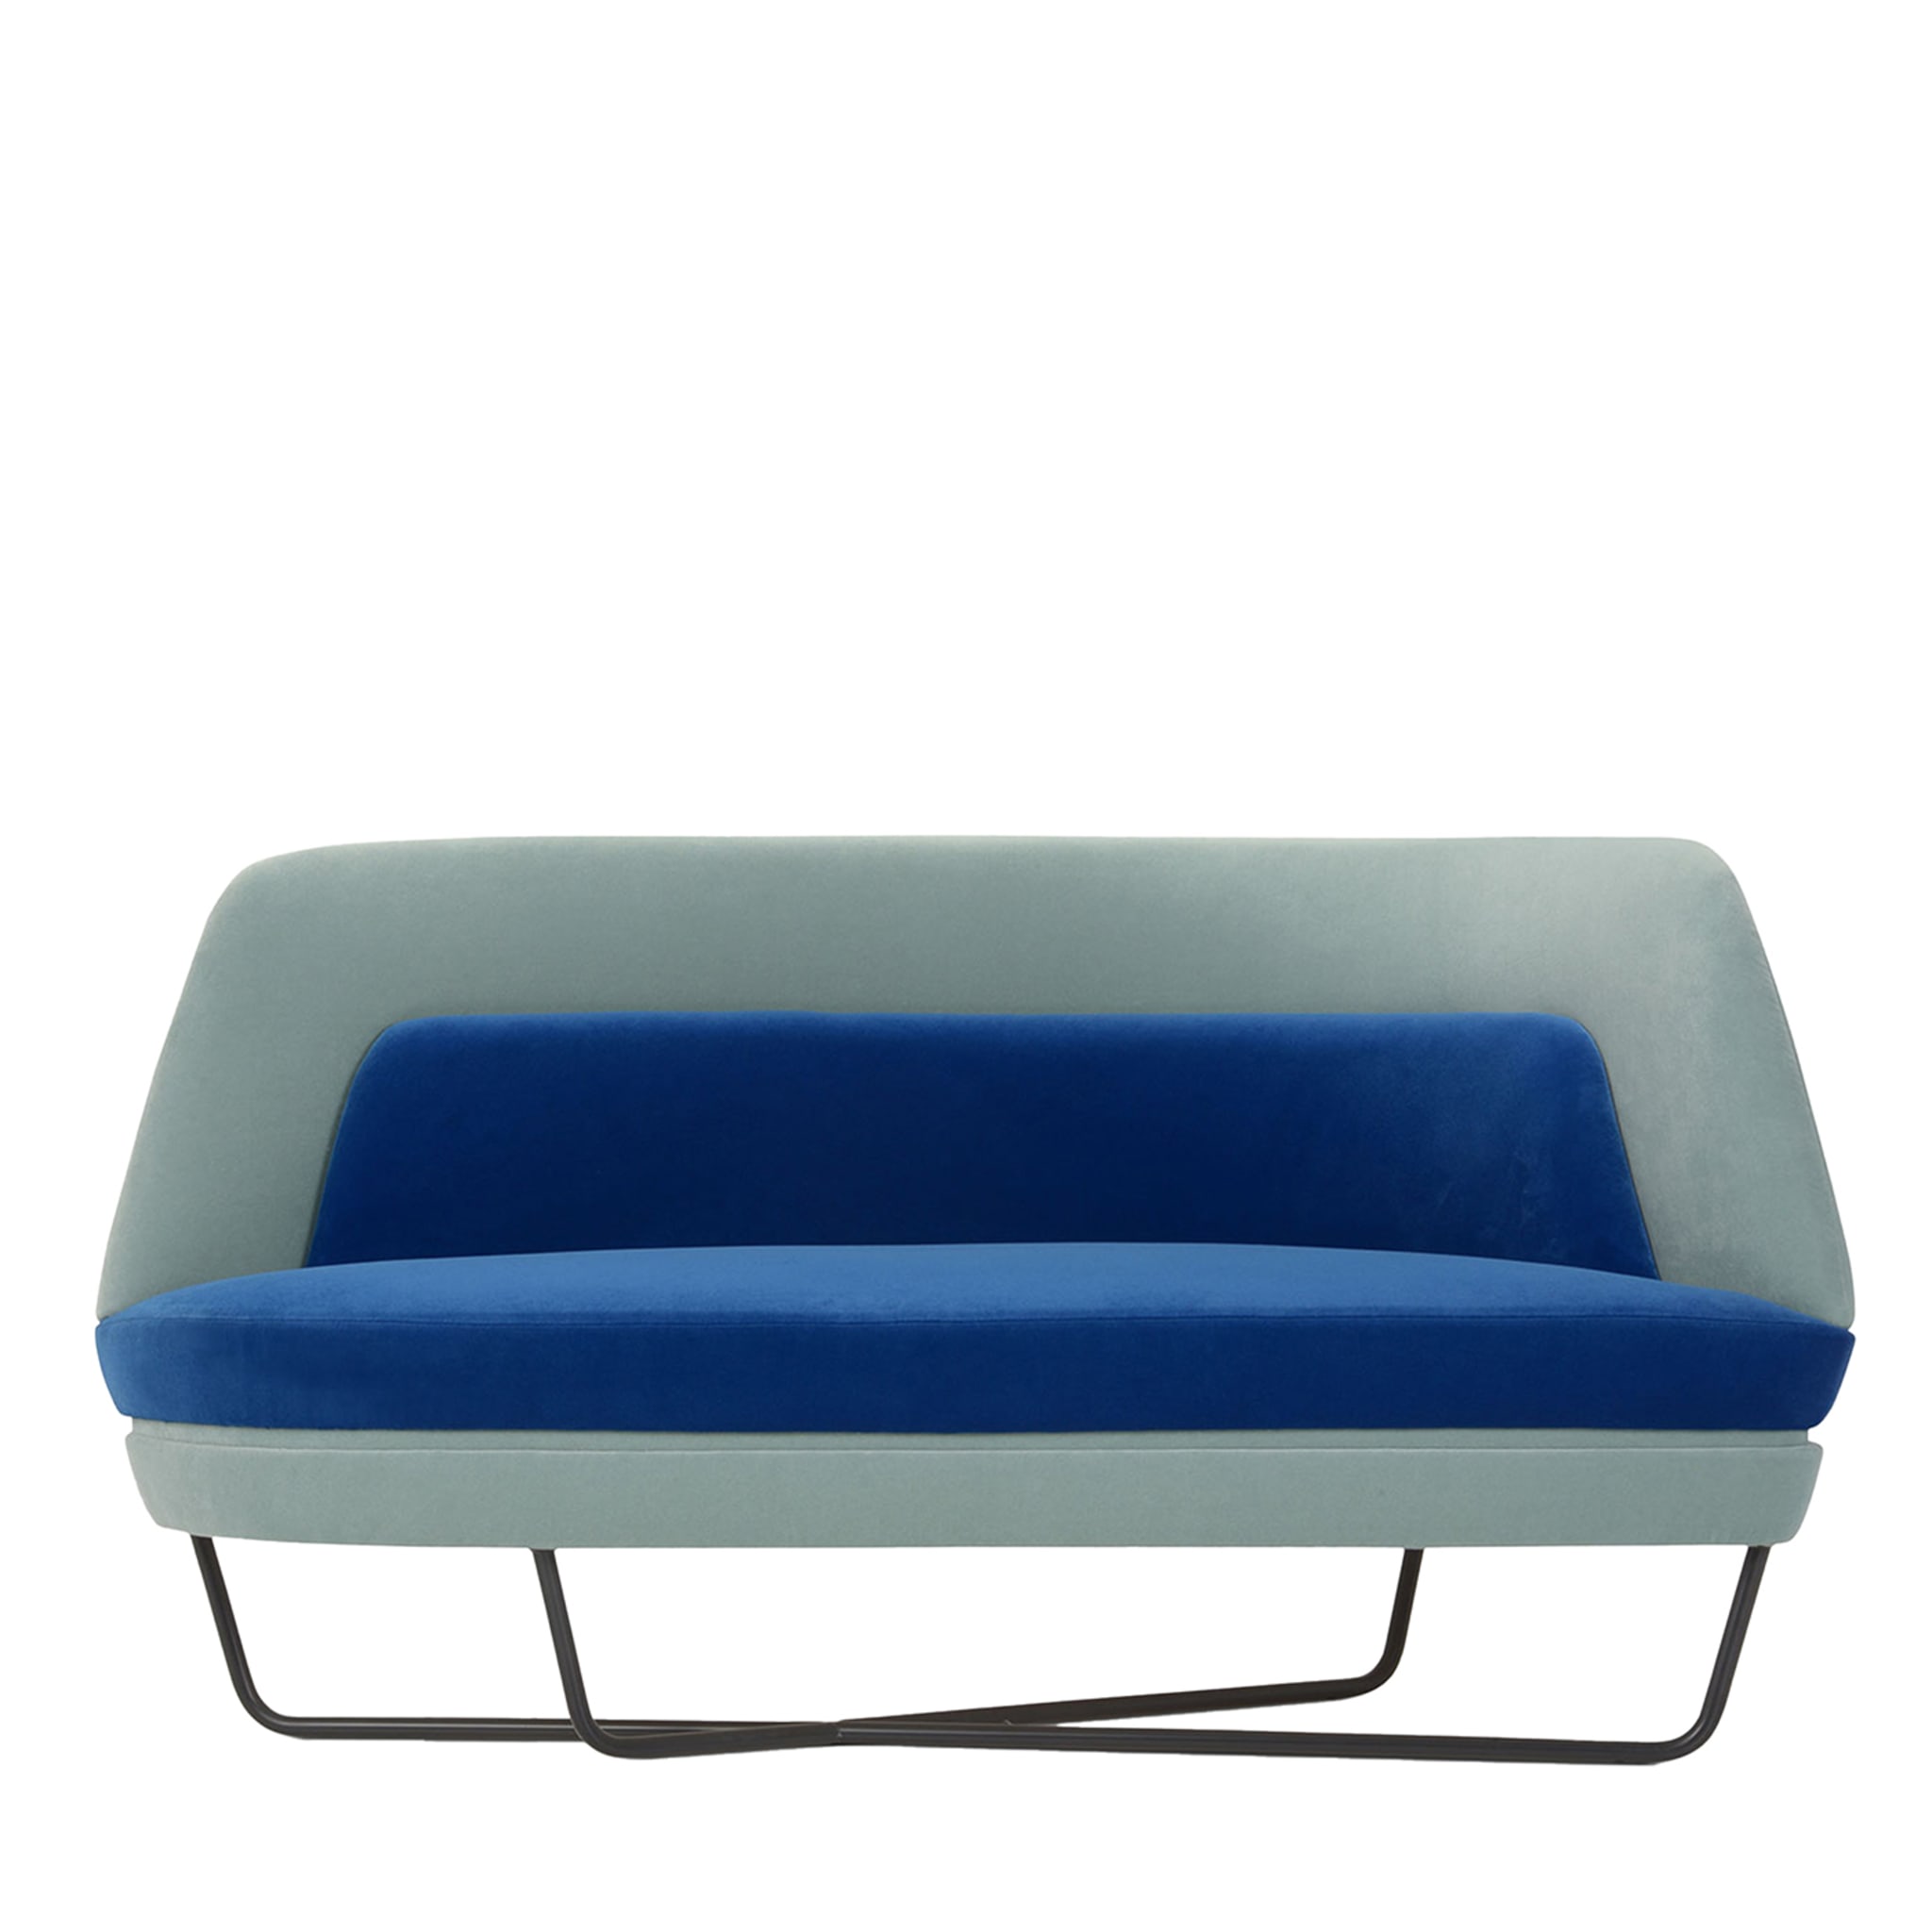 Bixib Blue Sofa by Luca Alessandrini - Main view